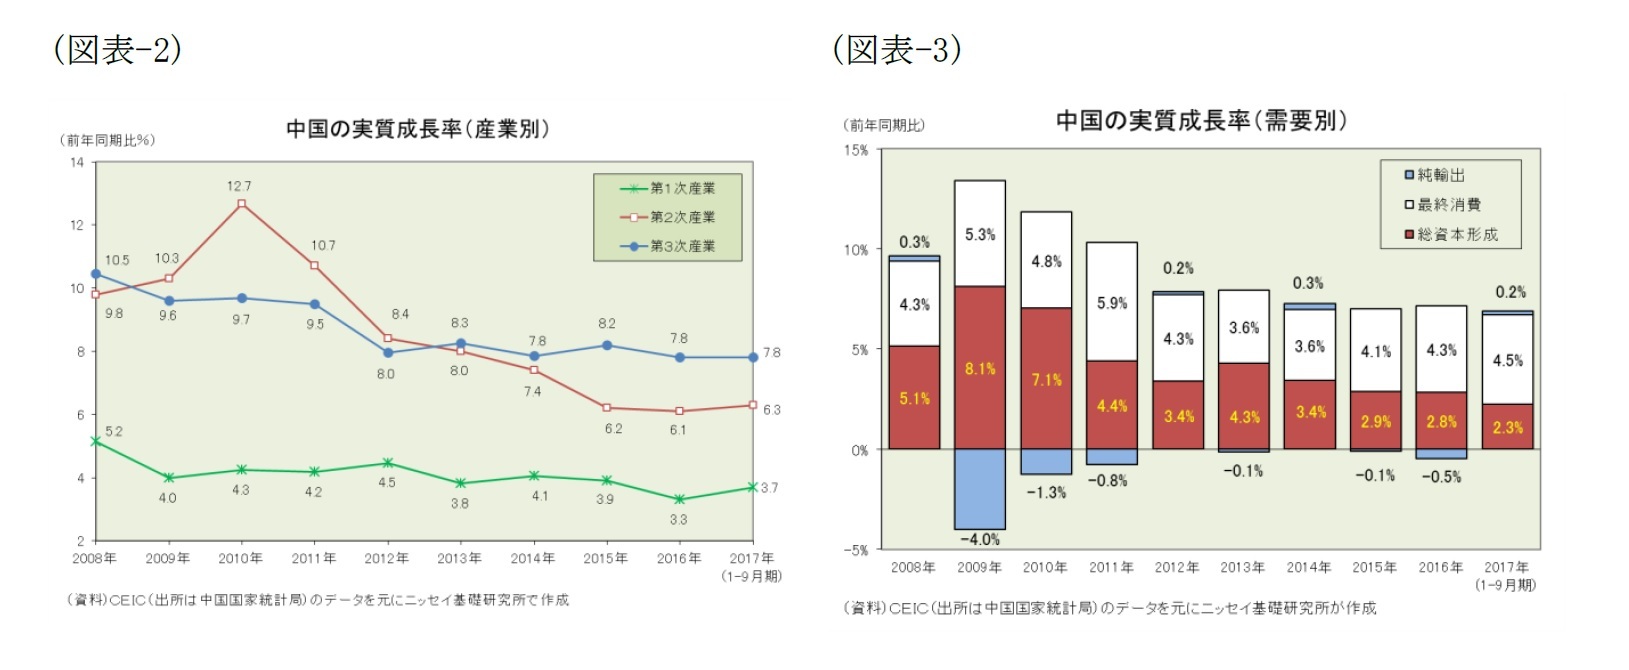 （図表-2）中国の実質成長率(産業別)/（図表-3）中国の実質成長率(需要別)